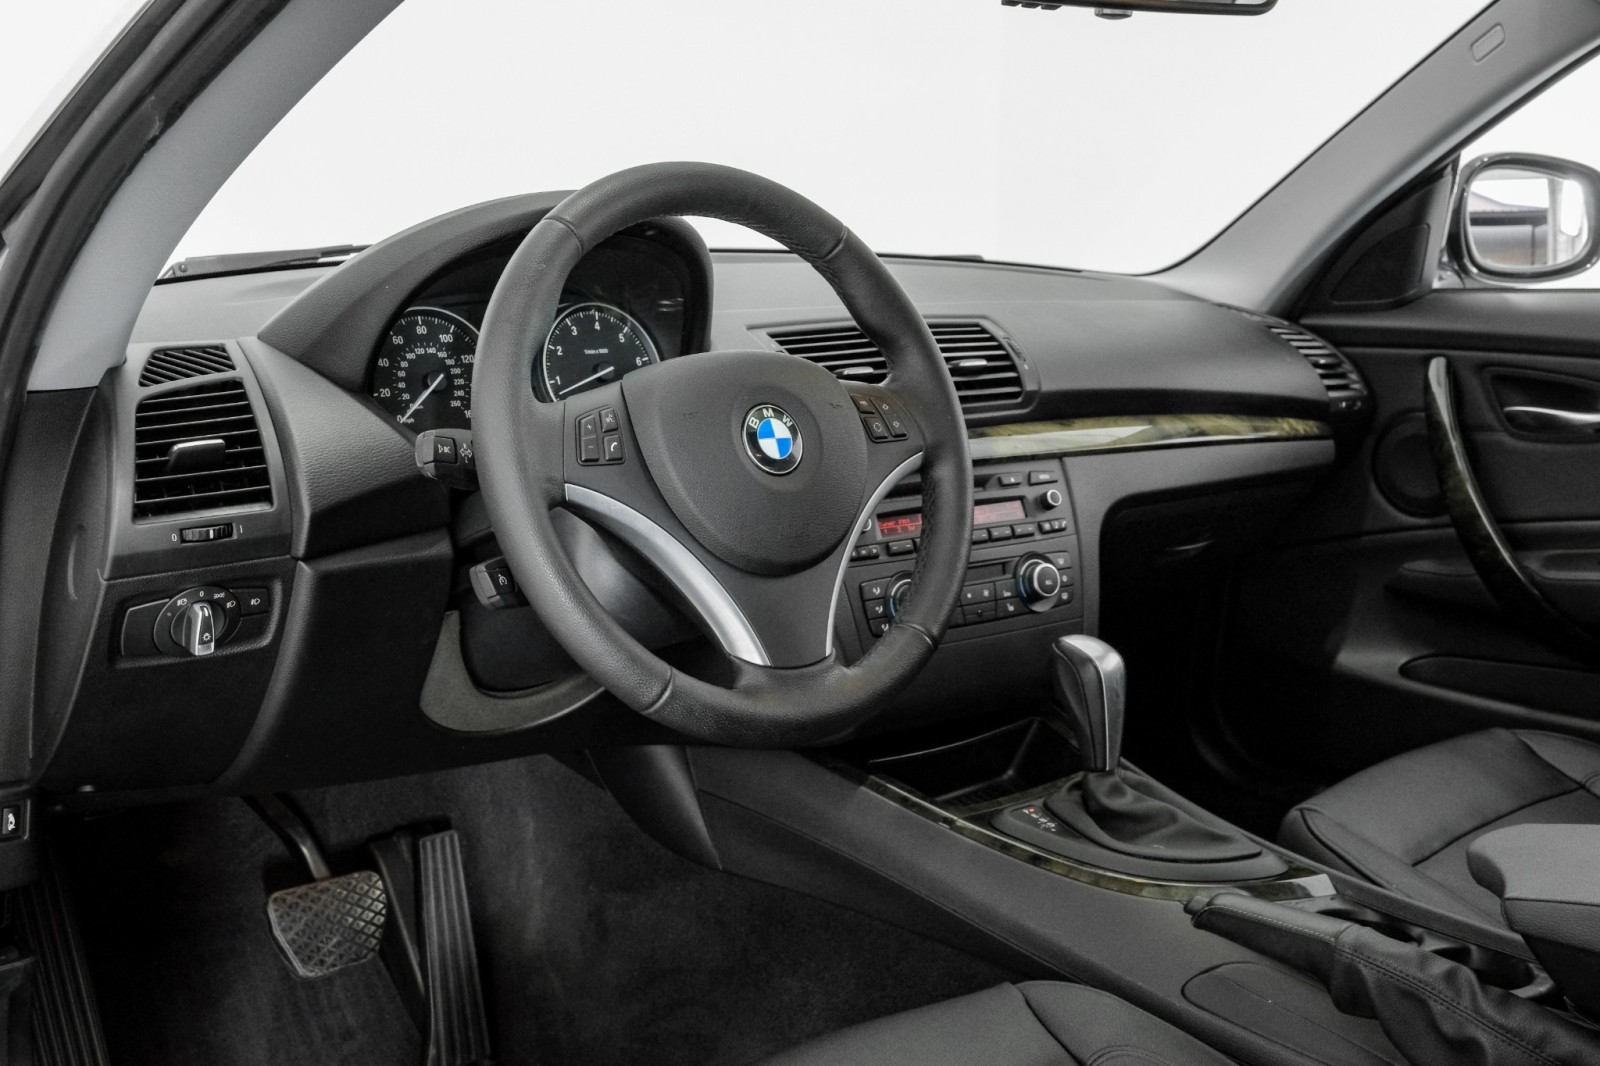 2012 BMW 128i AUTOMATIC PREMIUM PKG SUNROOF LEATHER HEATED SEATS 14